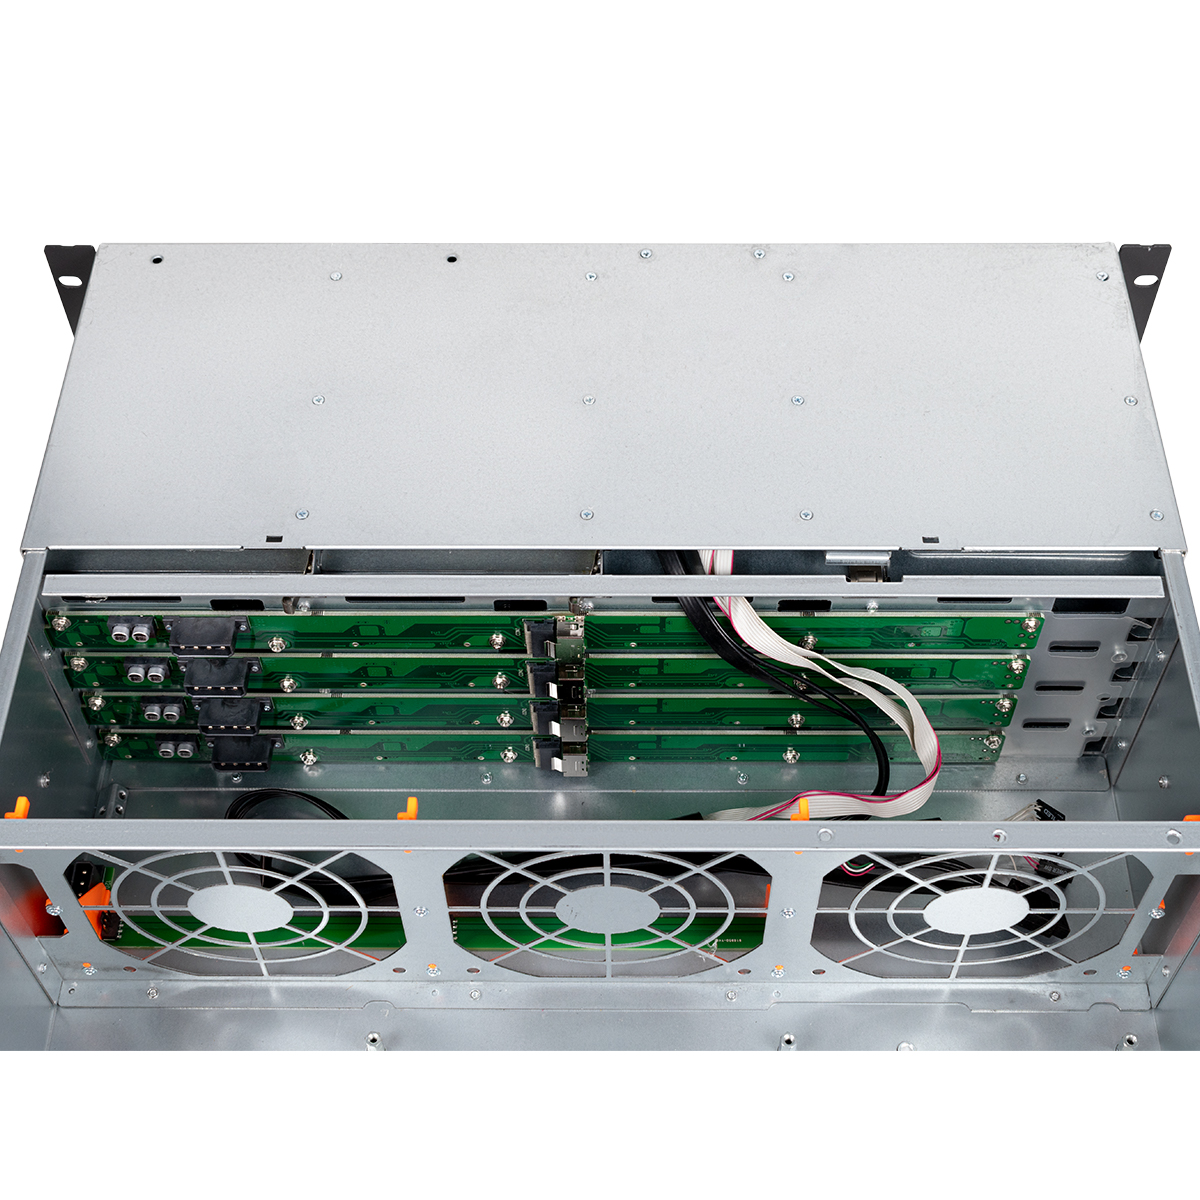 Unykach HSW4416 Server 3U Rack 16 Bays Hot Swap - Tailles de disque prises en charge 3,5" - Cartes mères compatibles EEB, CEB, ATX, MicroATX - USB-A 2.0